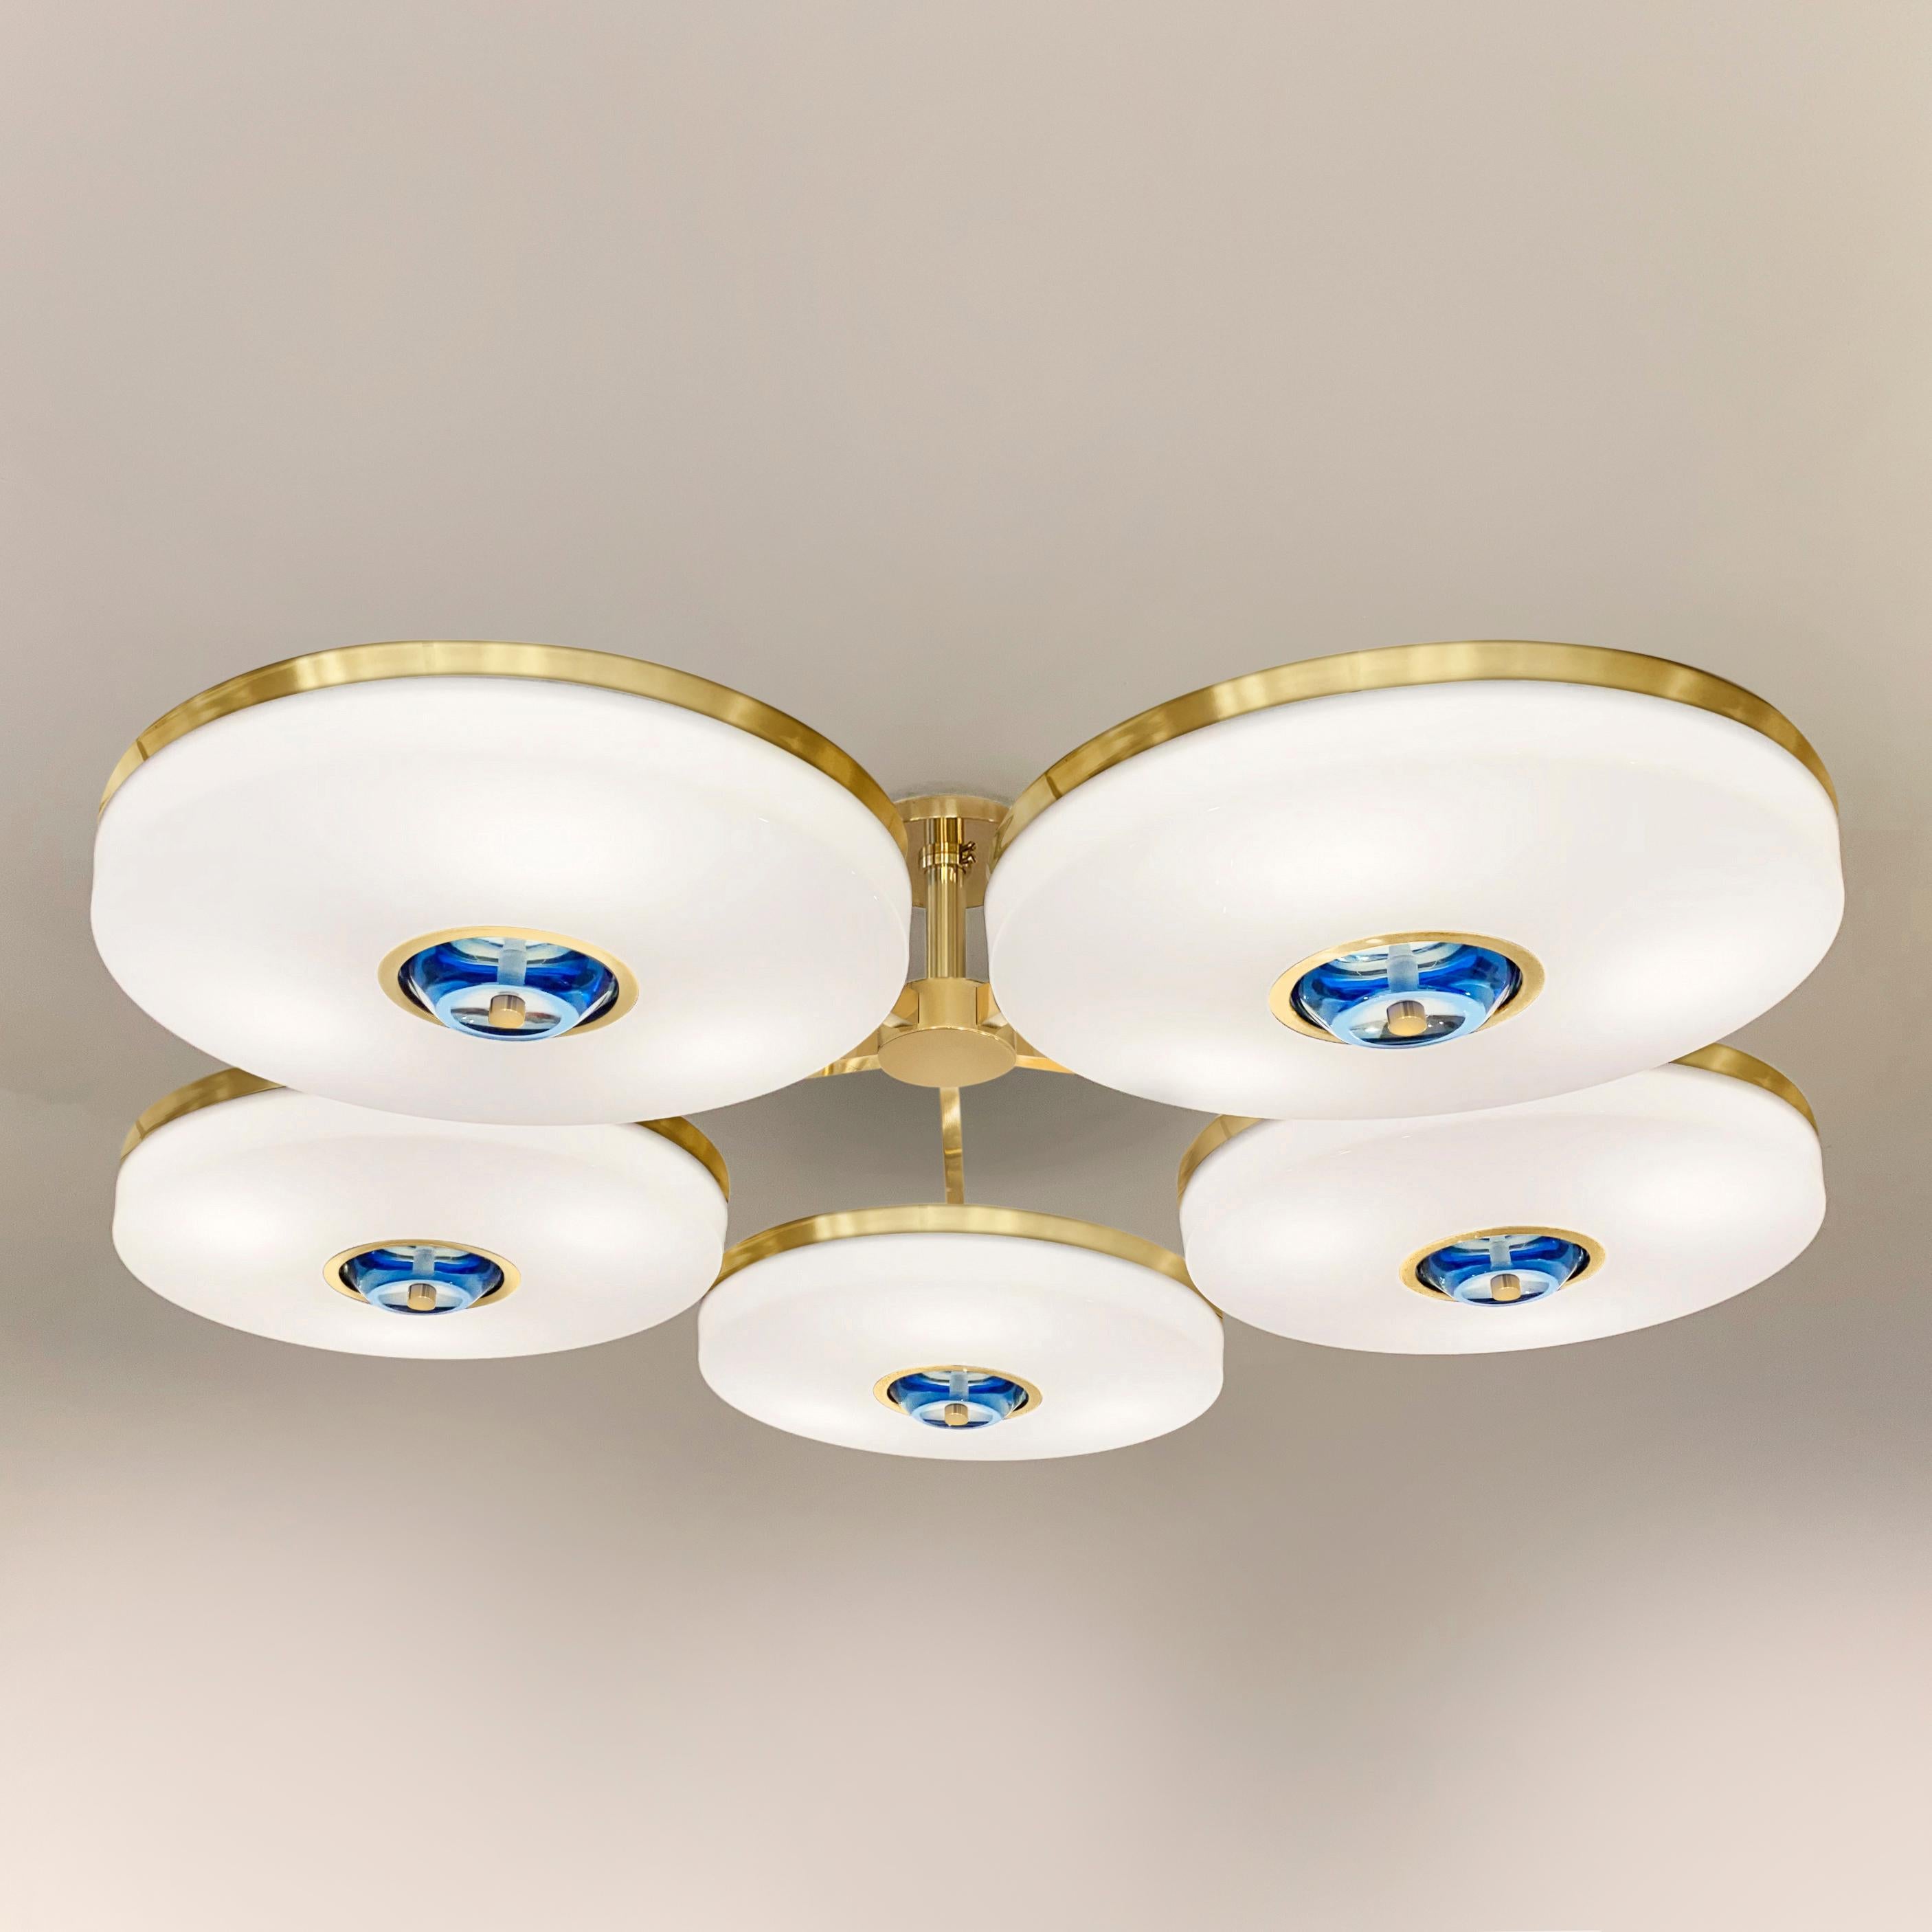 Italian Iris N. 5 Ceiling Light by Gaspare Asaro - Satin Nickel Finish For Sale